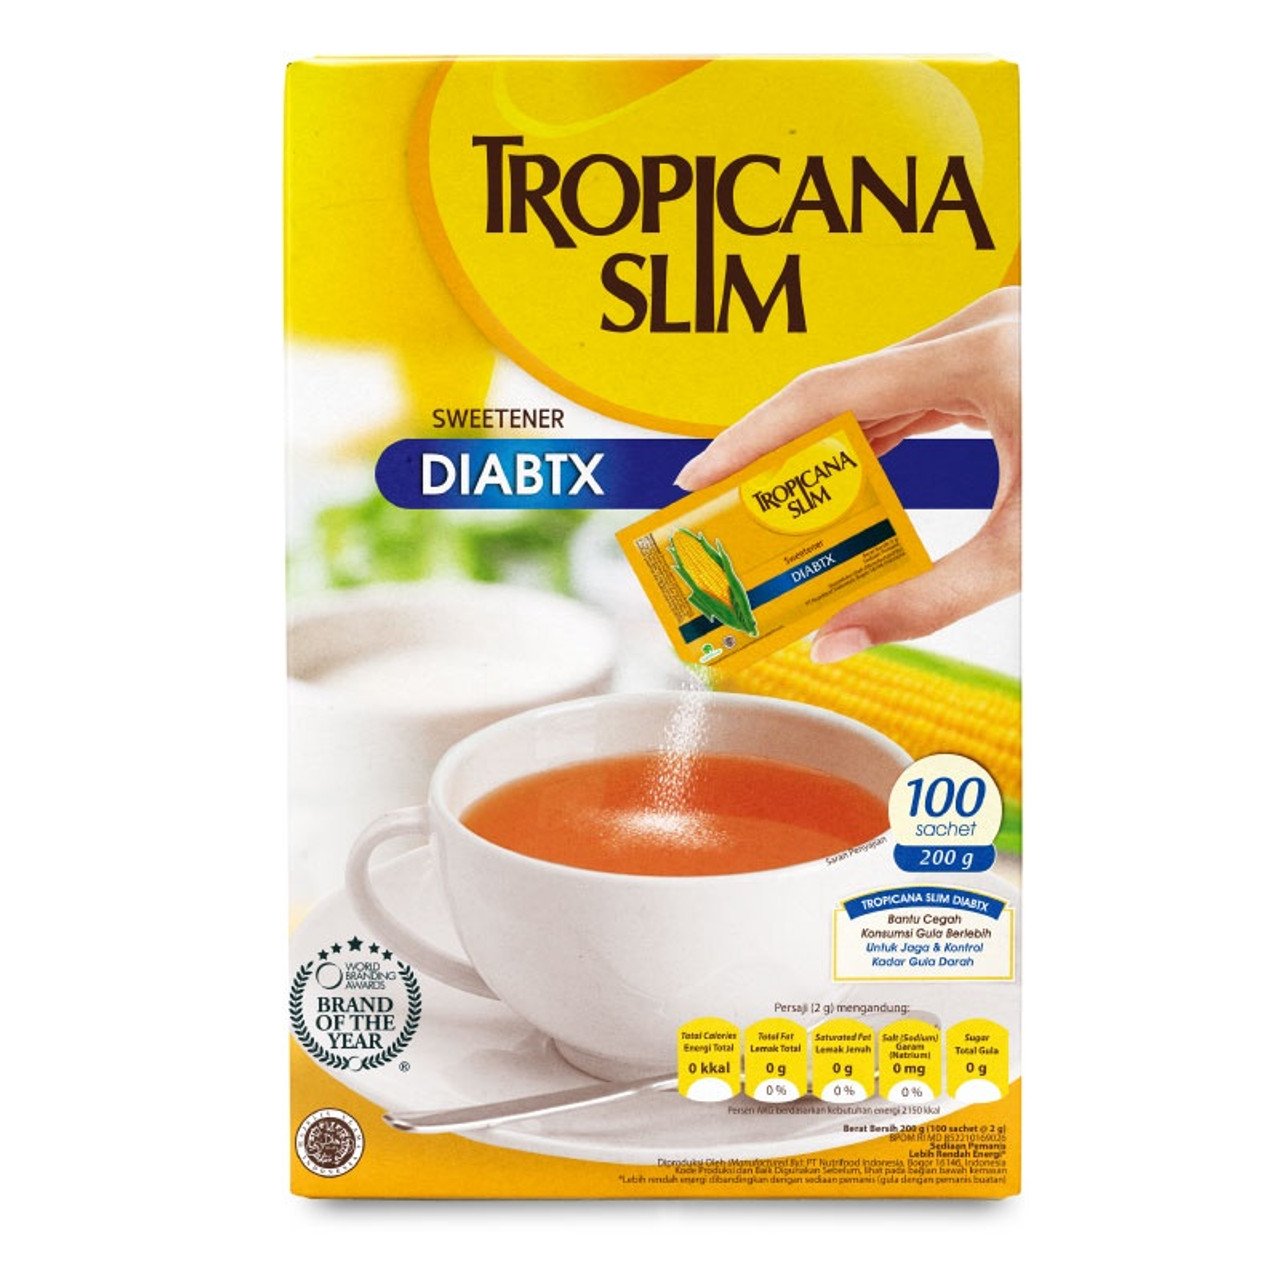 Tropicana Slim Sweetener Diabtx 100 Sachets